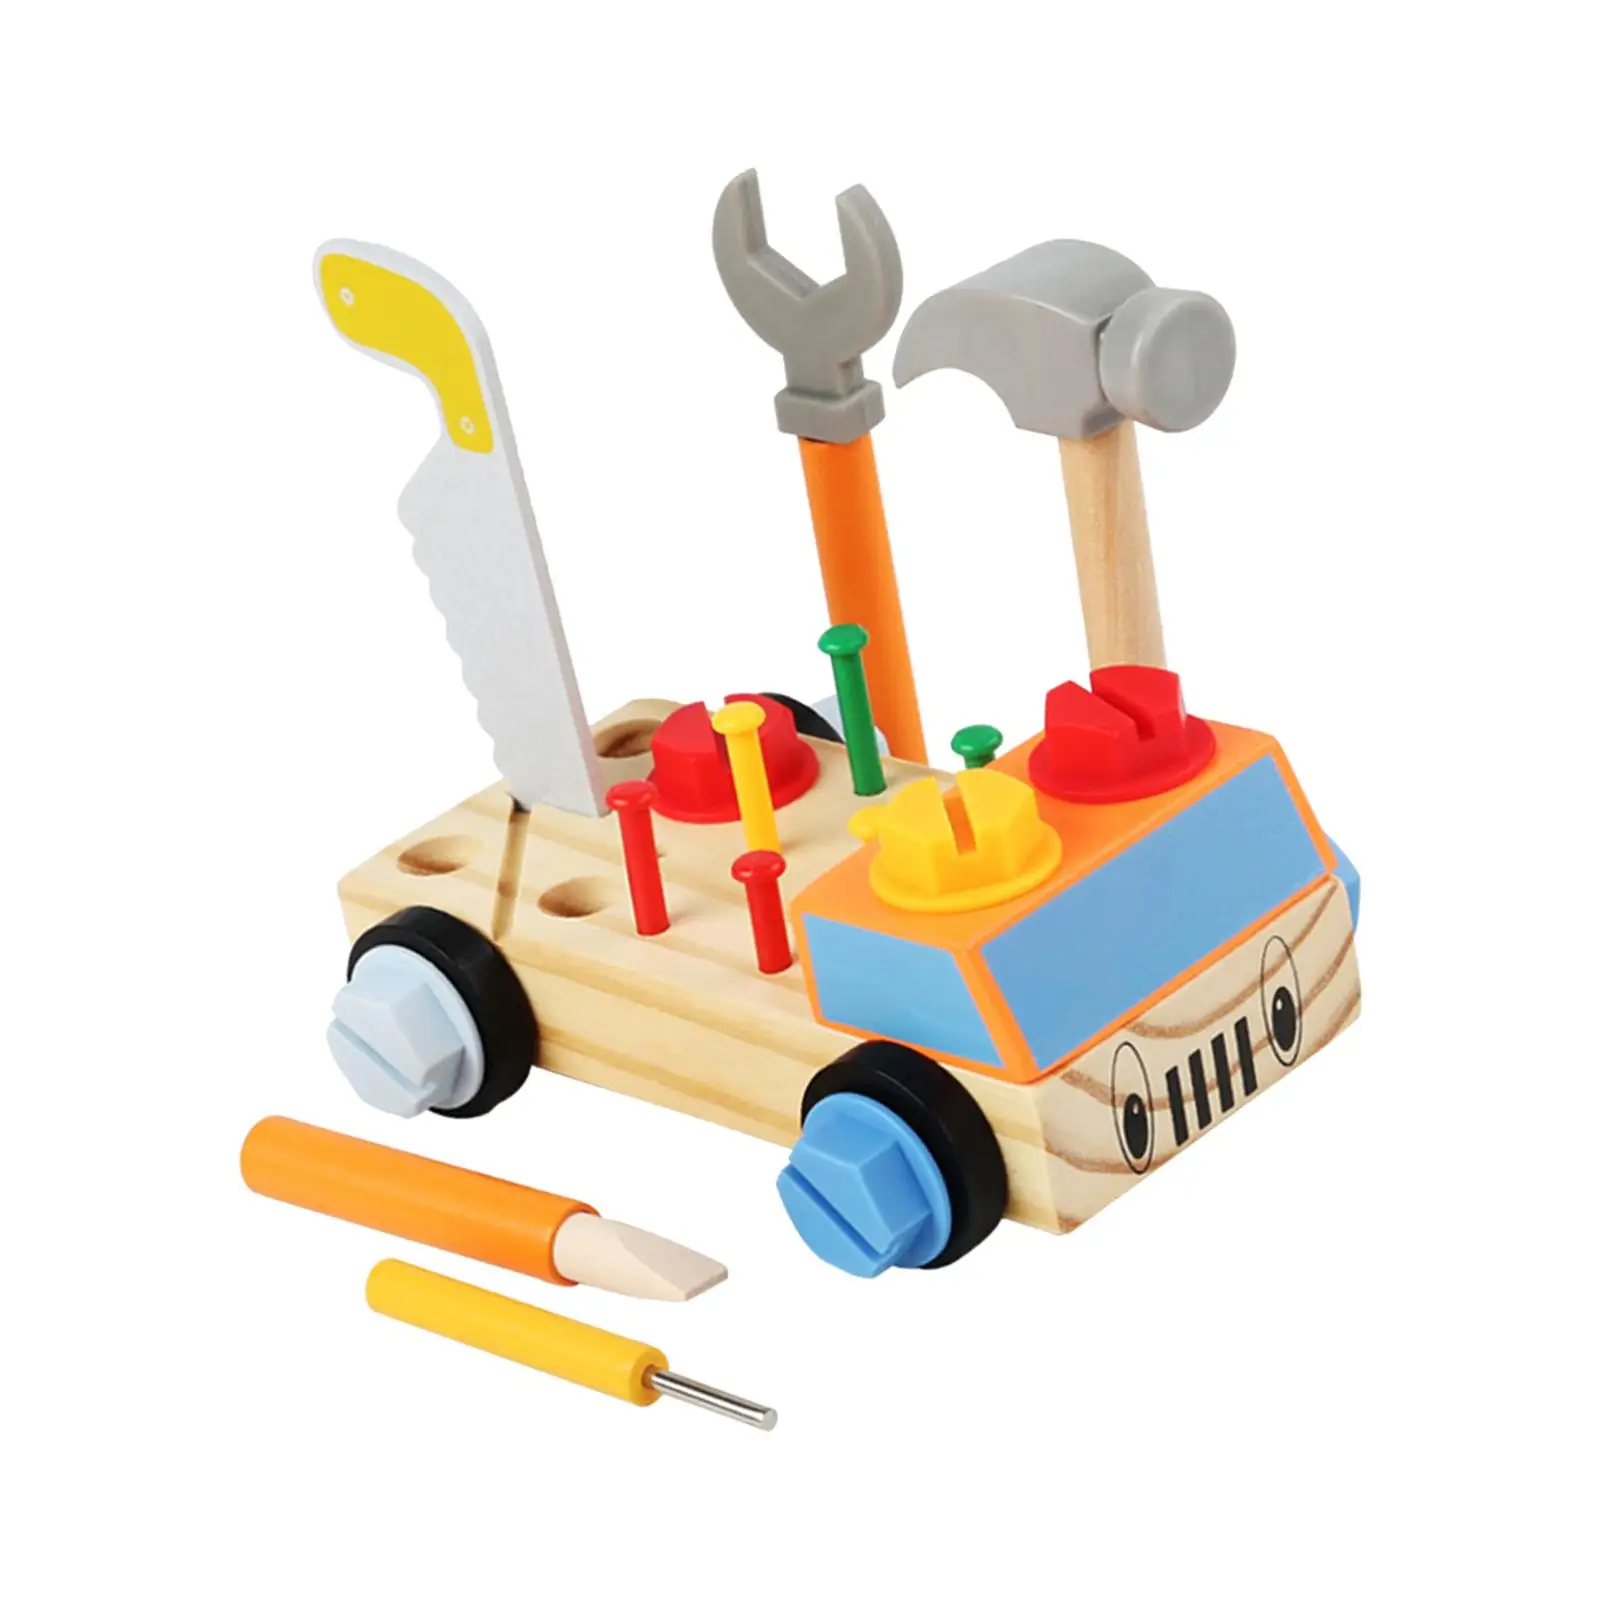 Children`s Construction Tool Workbench Motor Skills for Preschool Ages 3+